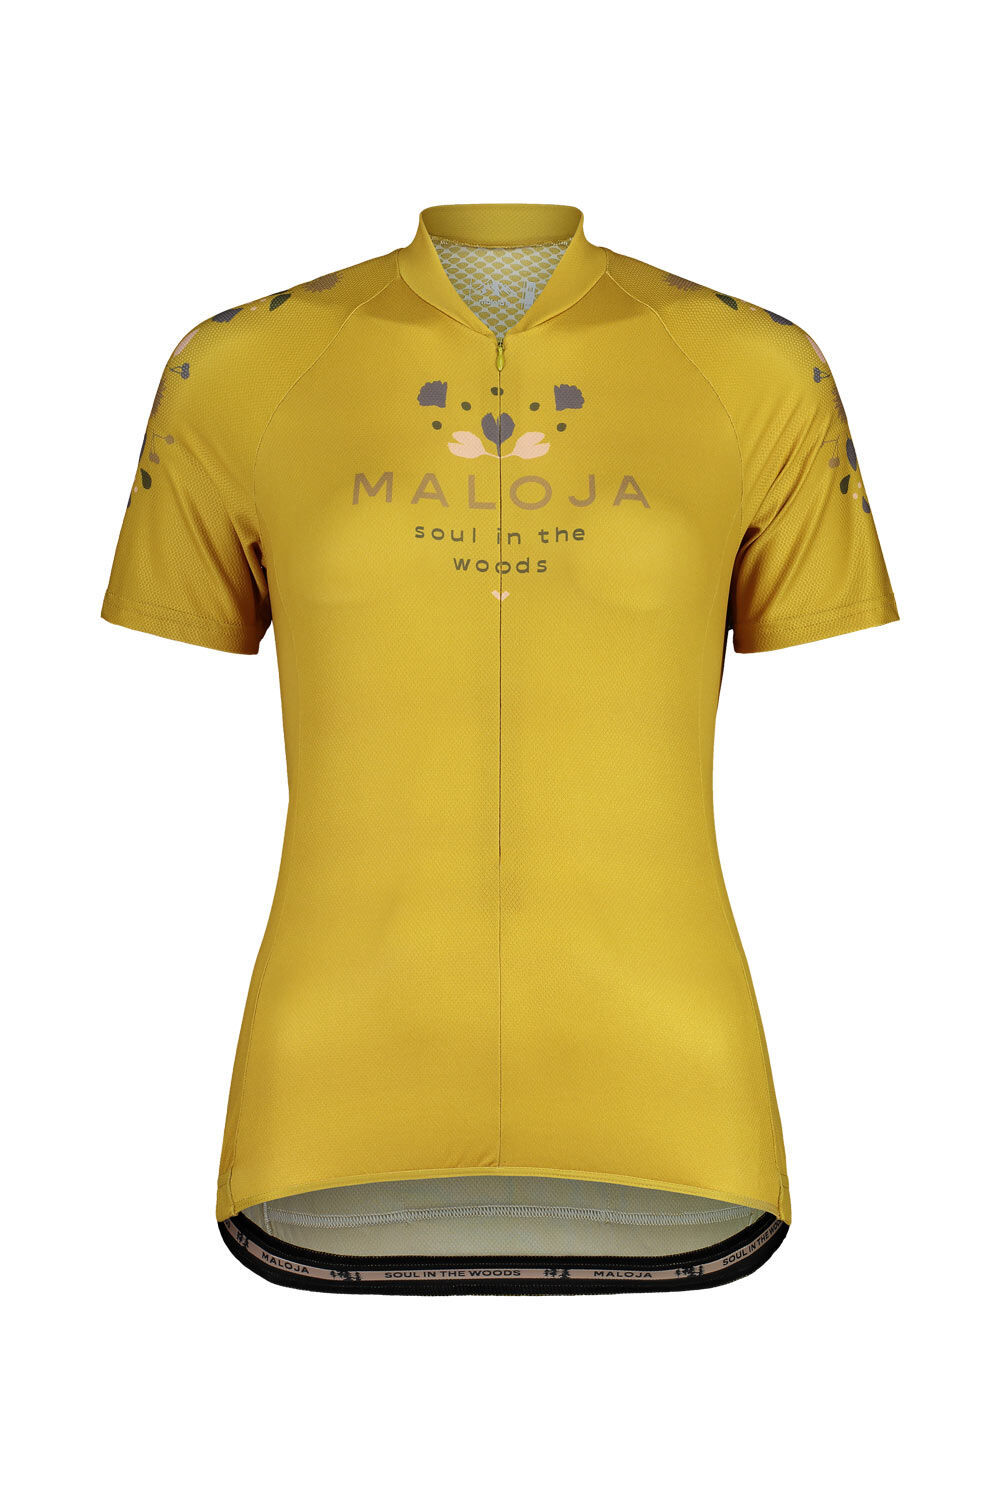 Maloja RubinieM. 1/2 - Cycling jersey - Women's